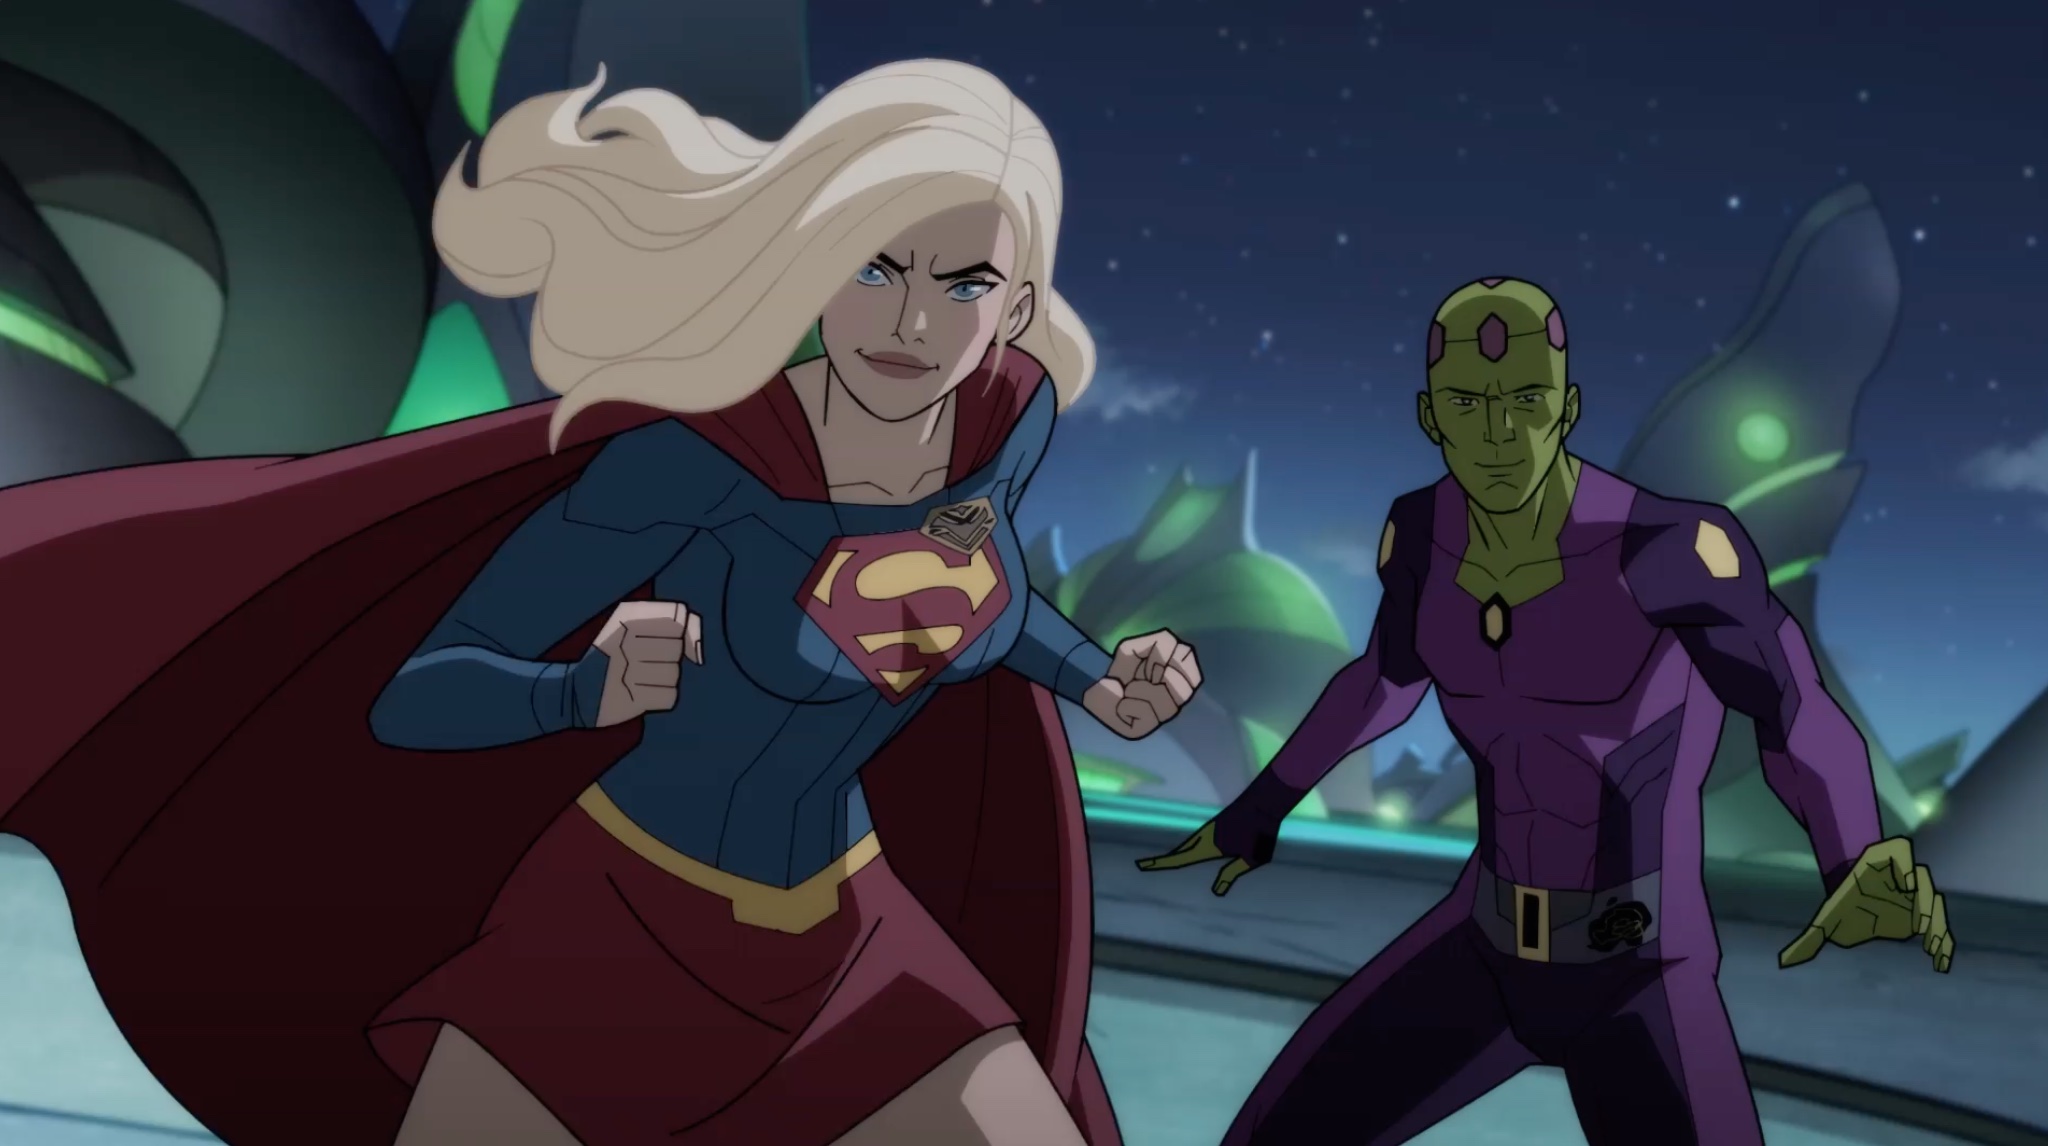 Legion of Super-Heroes with Super Girl (Meg Donnally) and Brainiac 5 (Harry Shum Jr.)